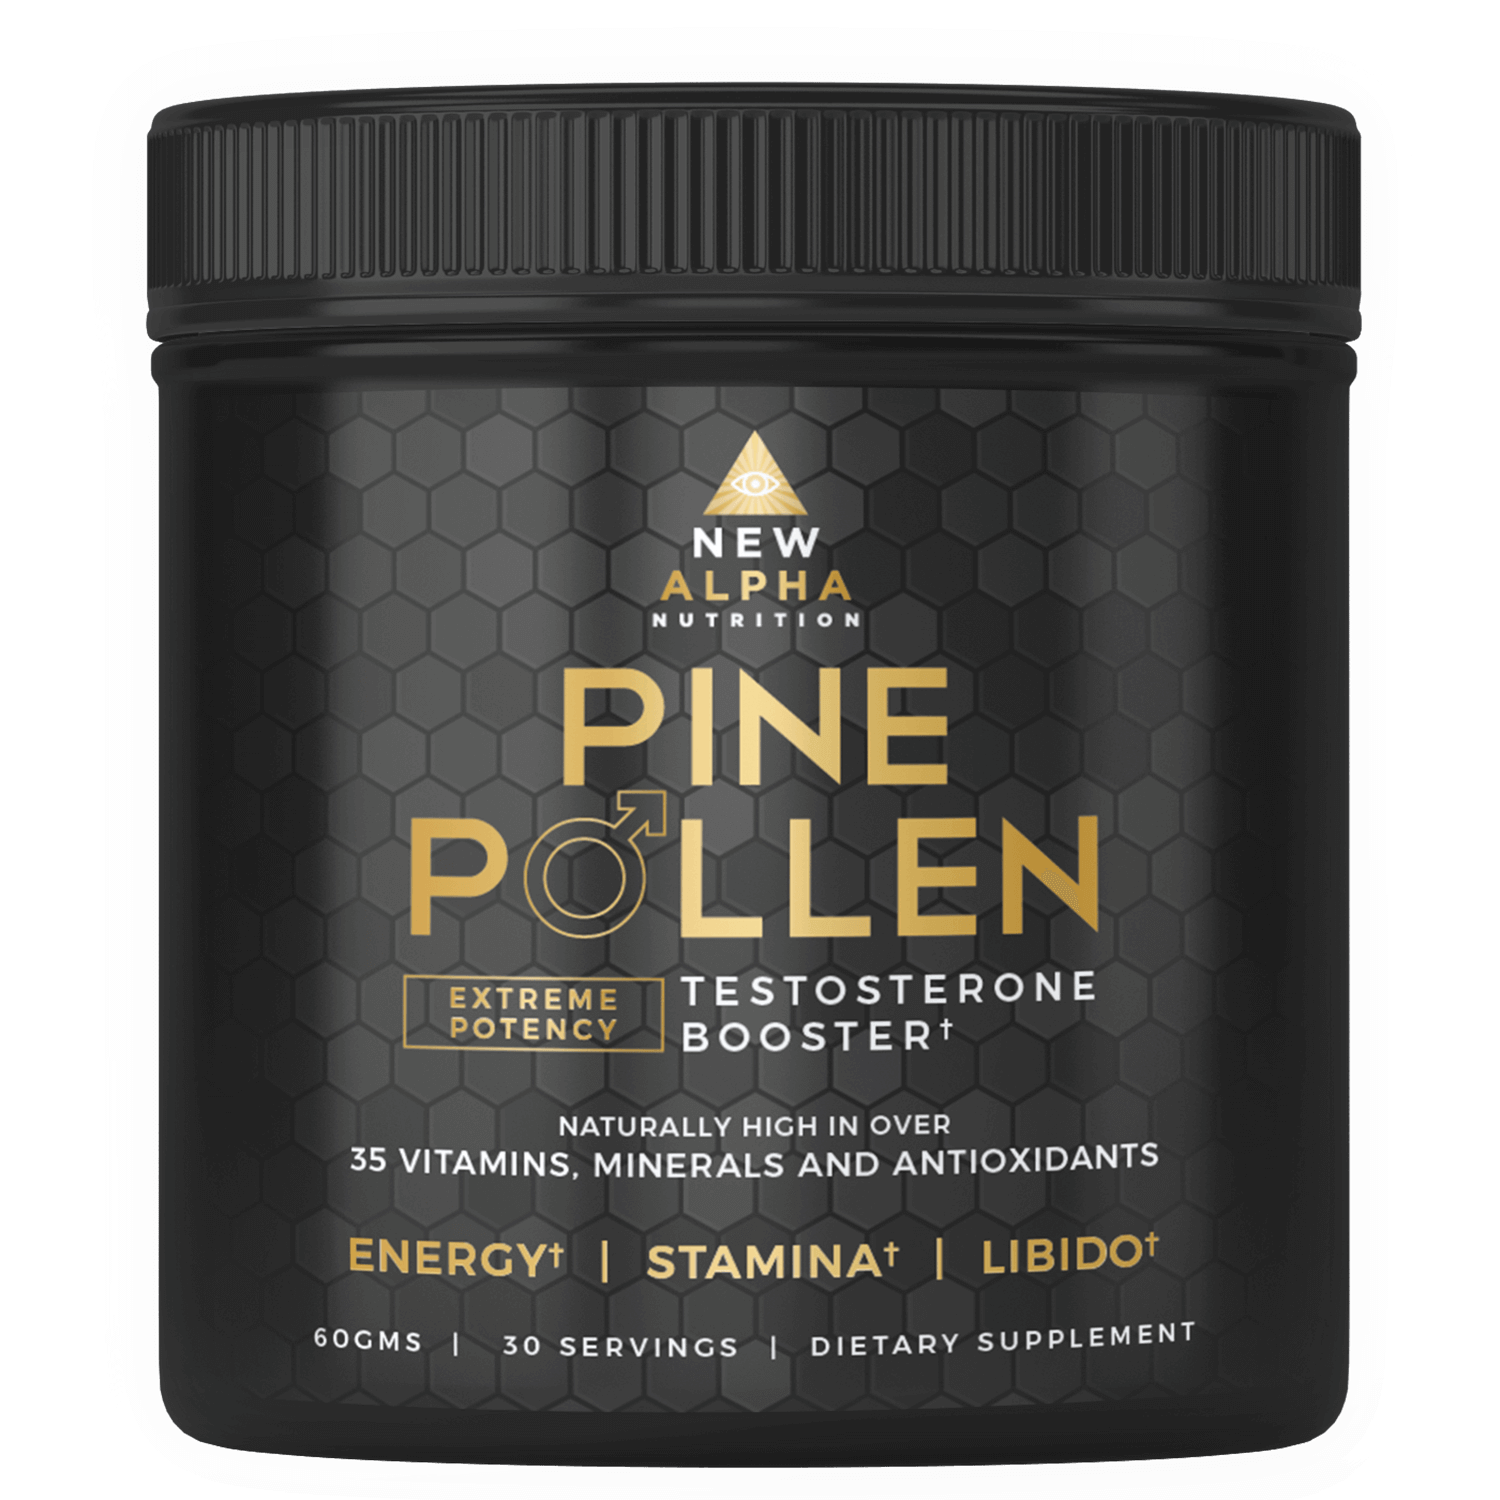 Pine Pollen Reviews